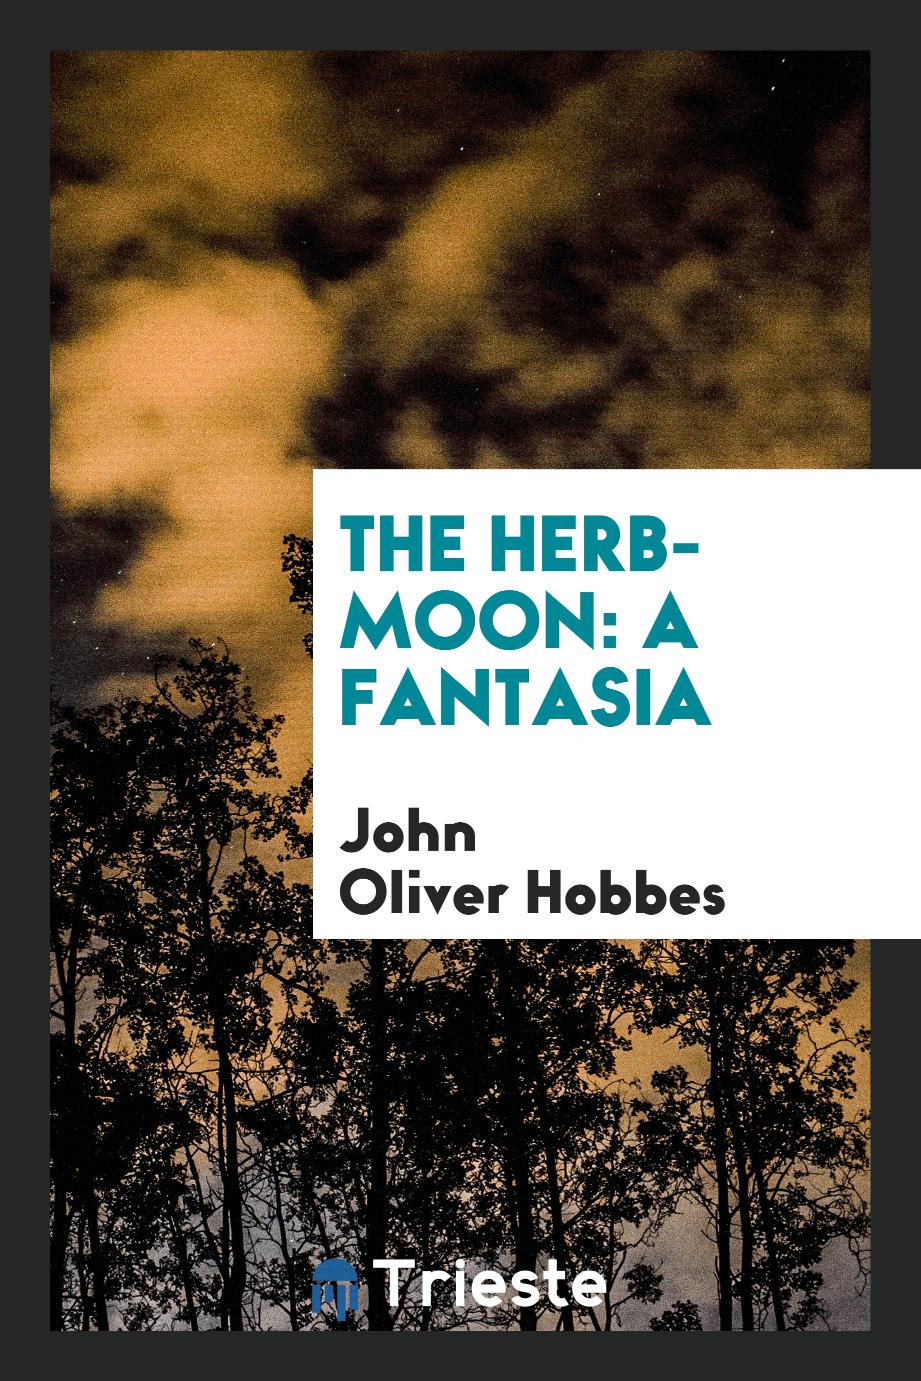 The herb-moon: a fantasia